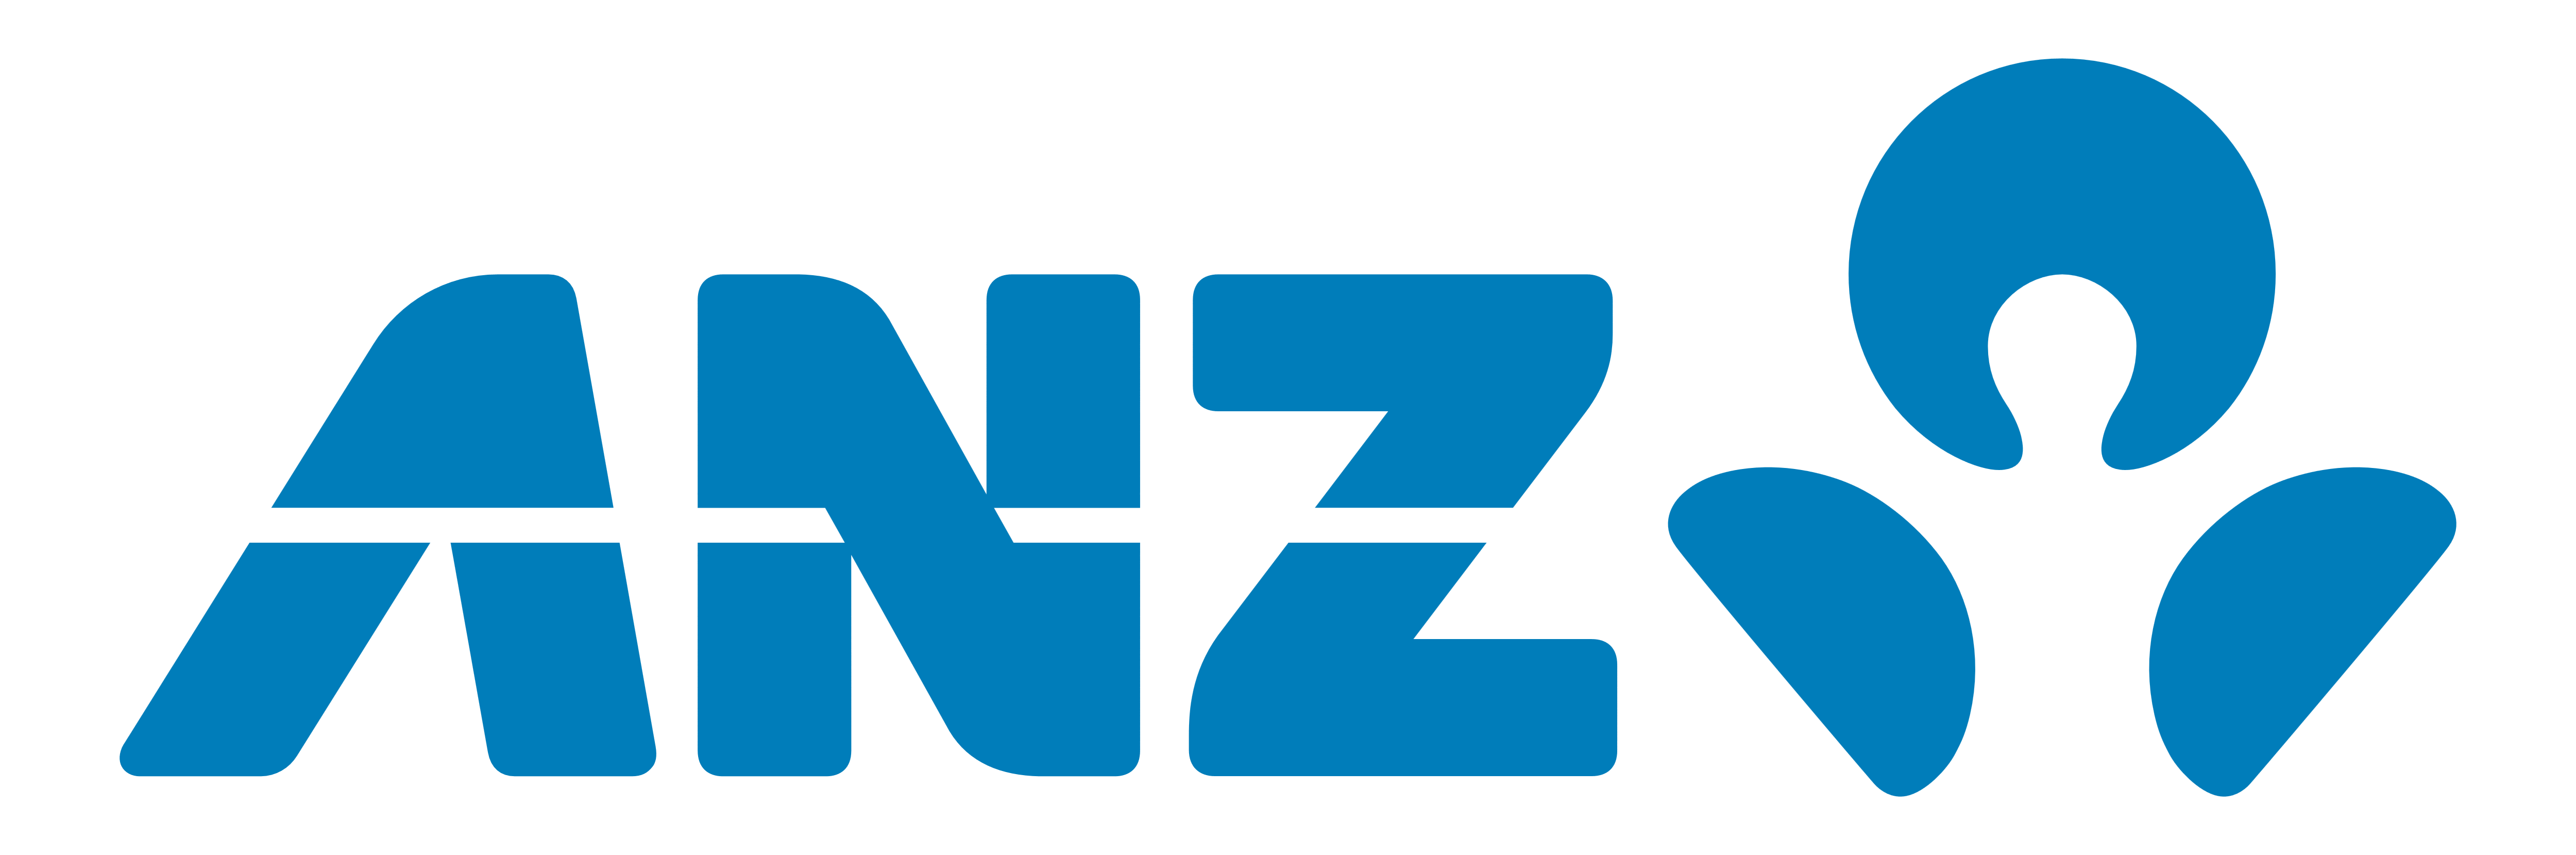 Anz_logo_PNG1